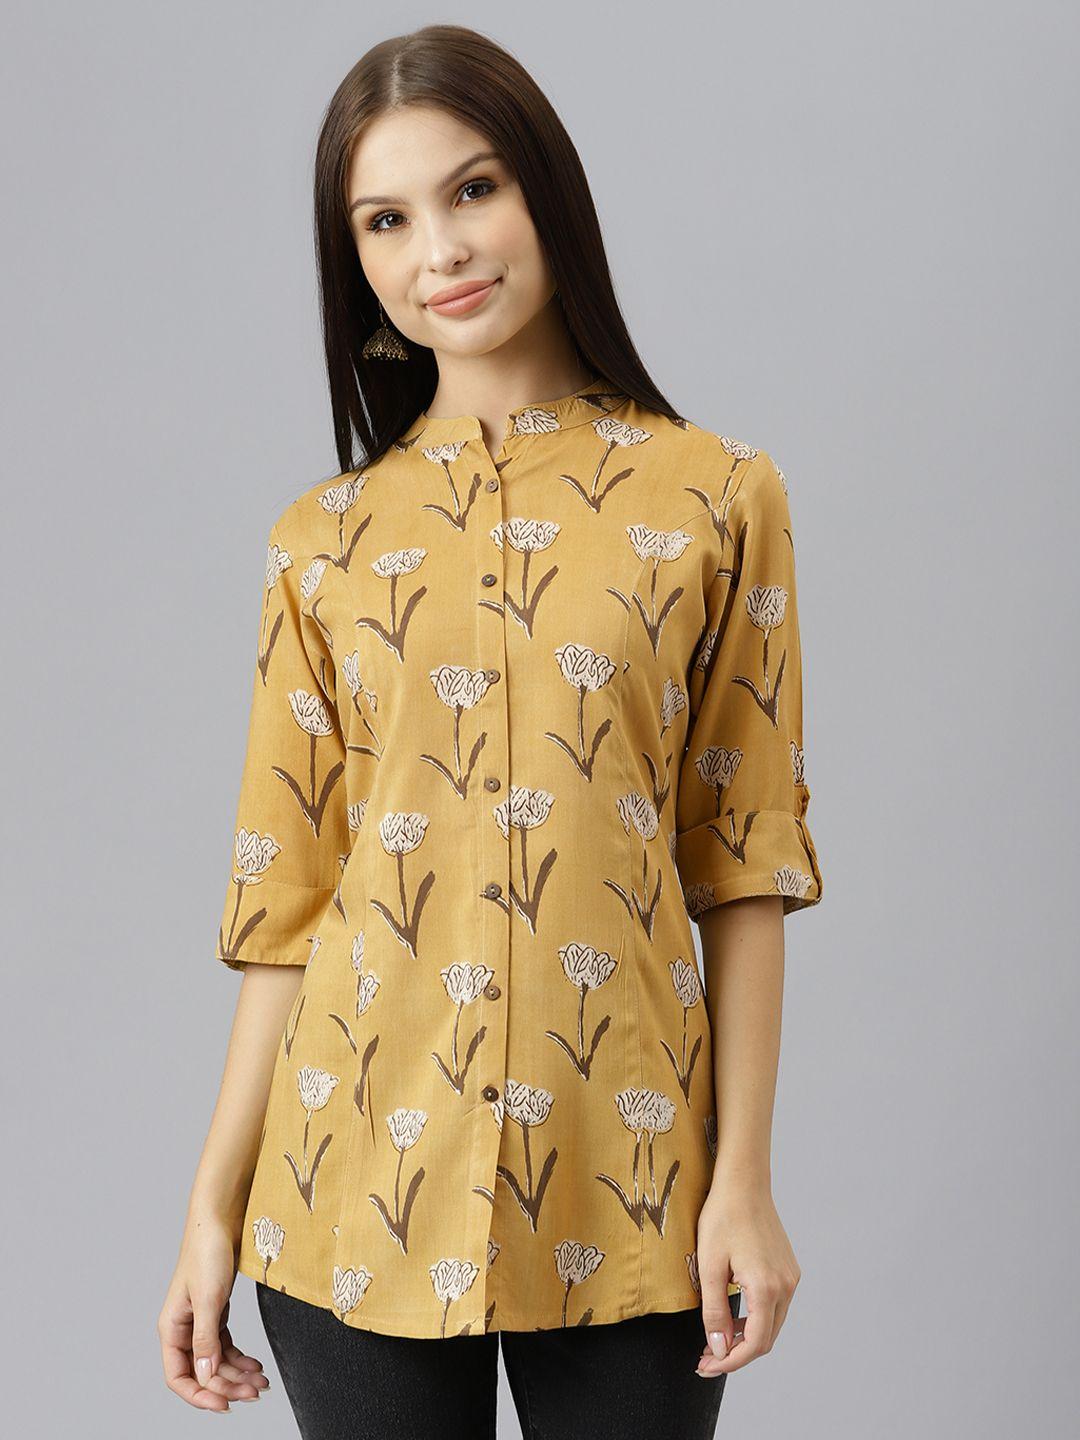 divena mustard yellow floral print mandarin collar roll-up sleeves shirt style top